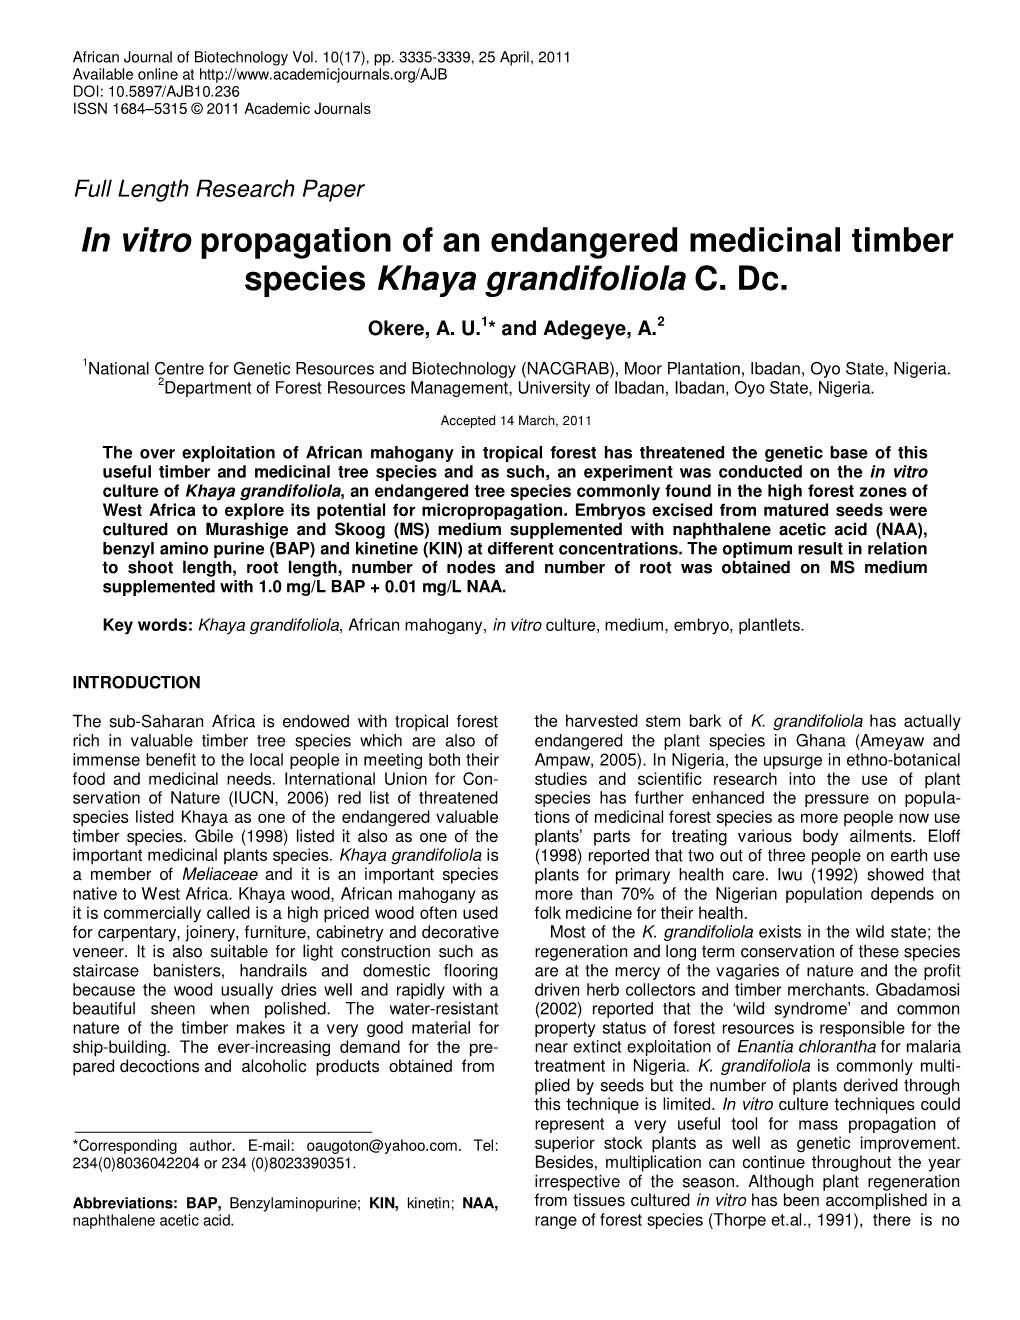 In Vitro Propagation of an Endangered Medicinal Timber Species Khaya Grandifoliola C